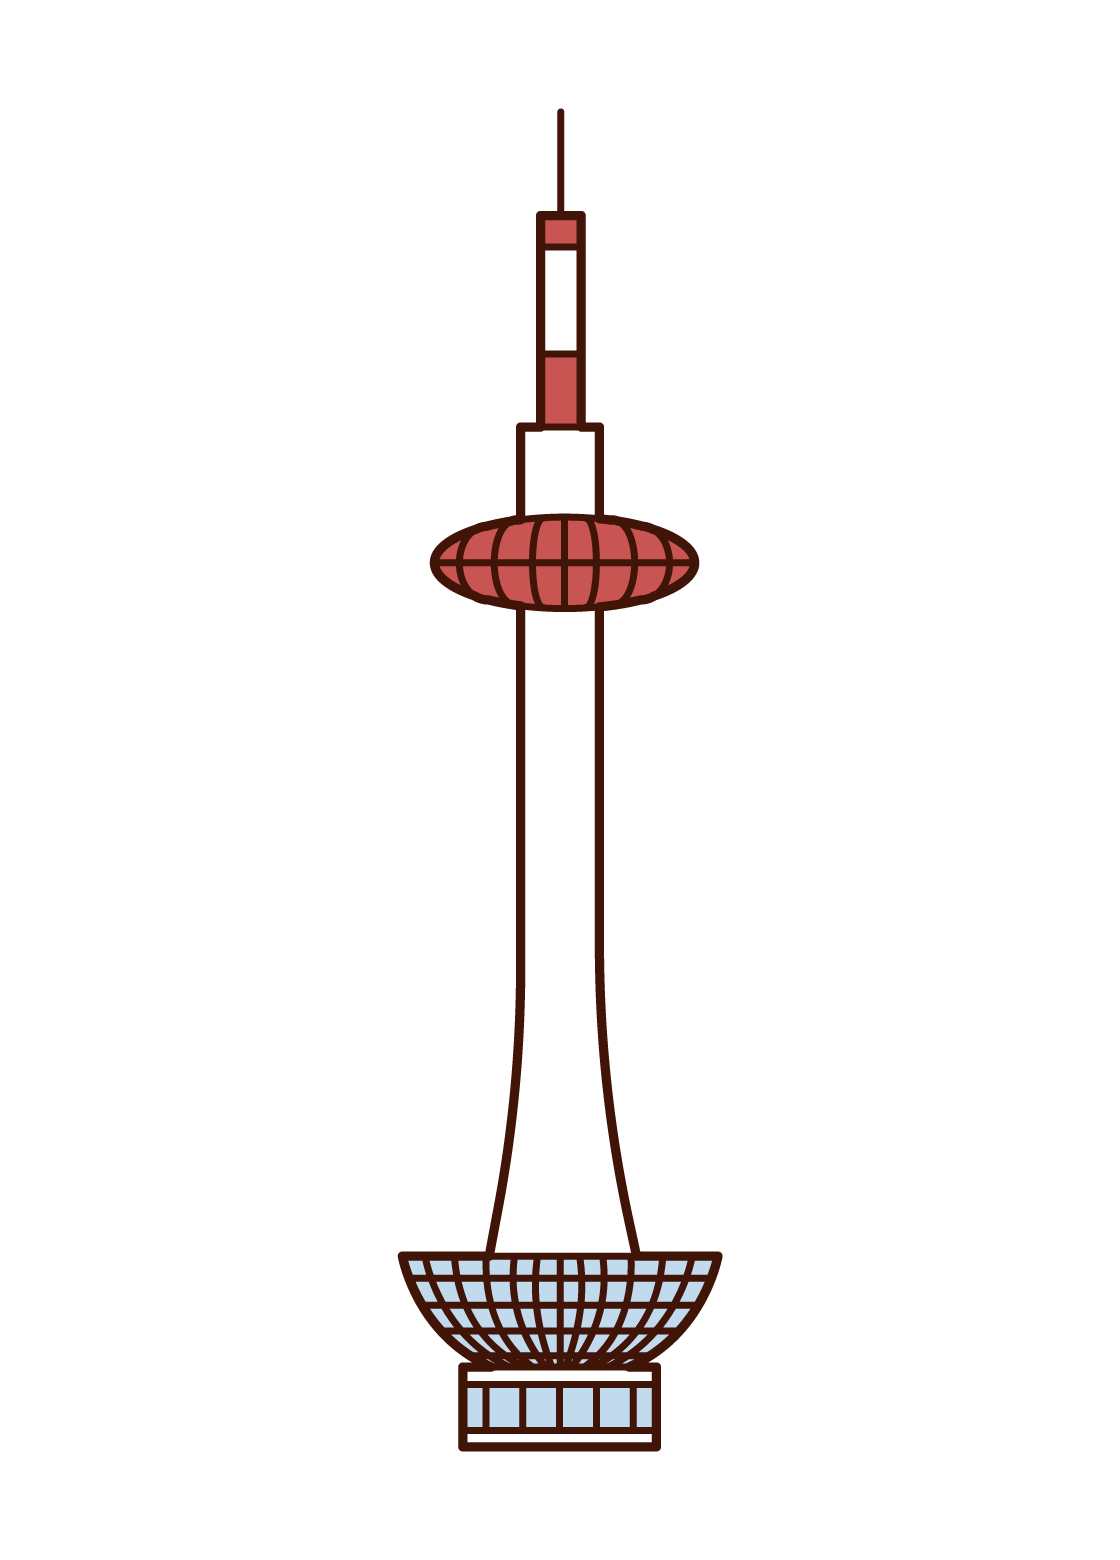 Illustration of Kyoto Tower